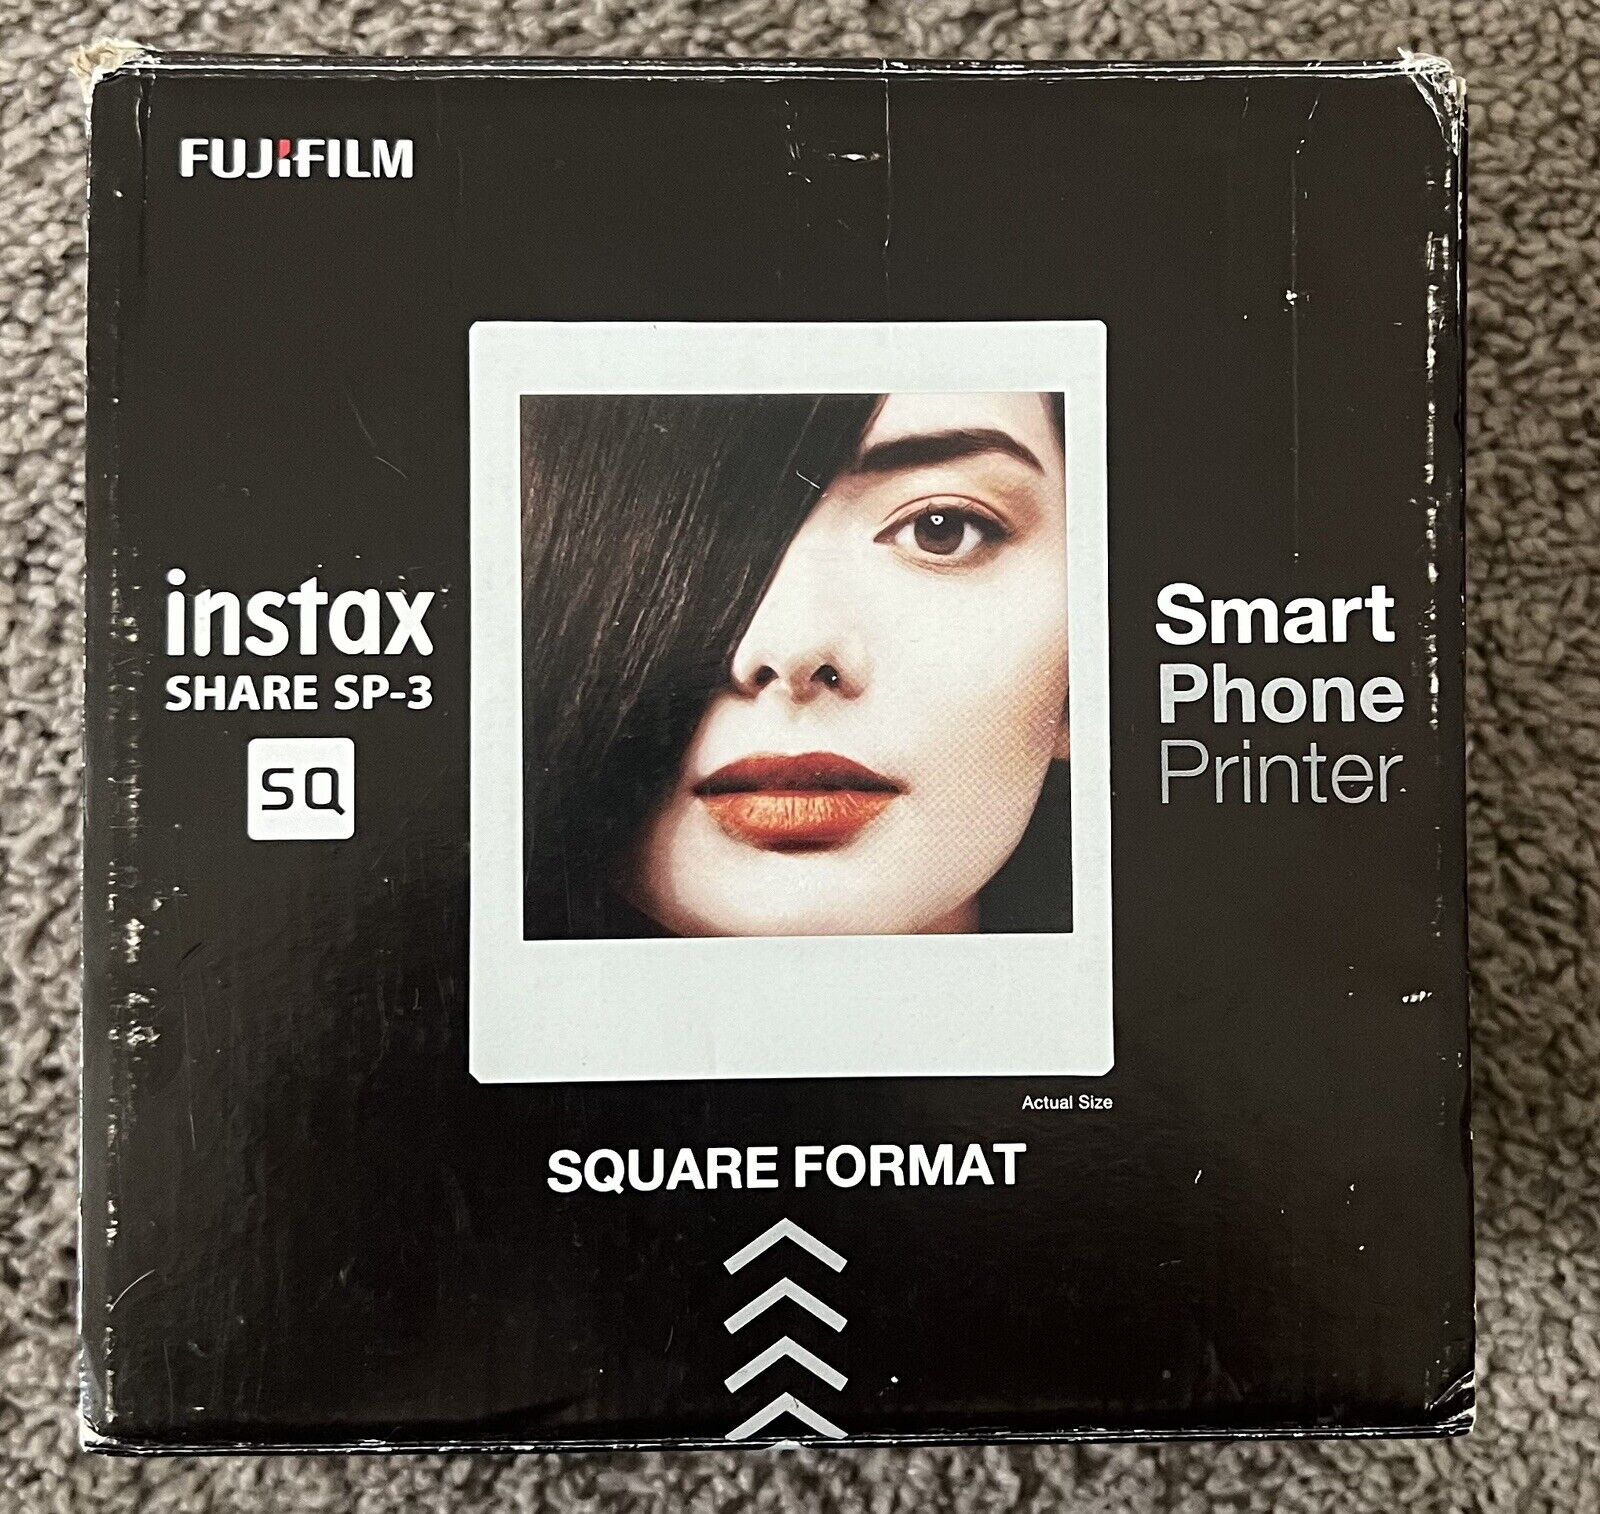 SP-3 Fujifilm Instax Share SP-3 Portable Mobile Printer - Black